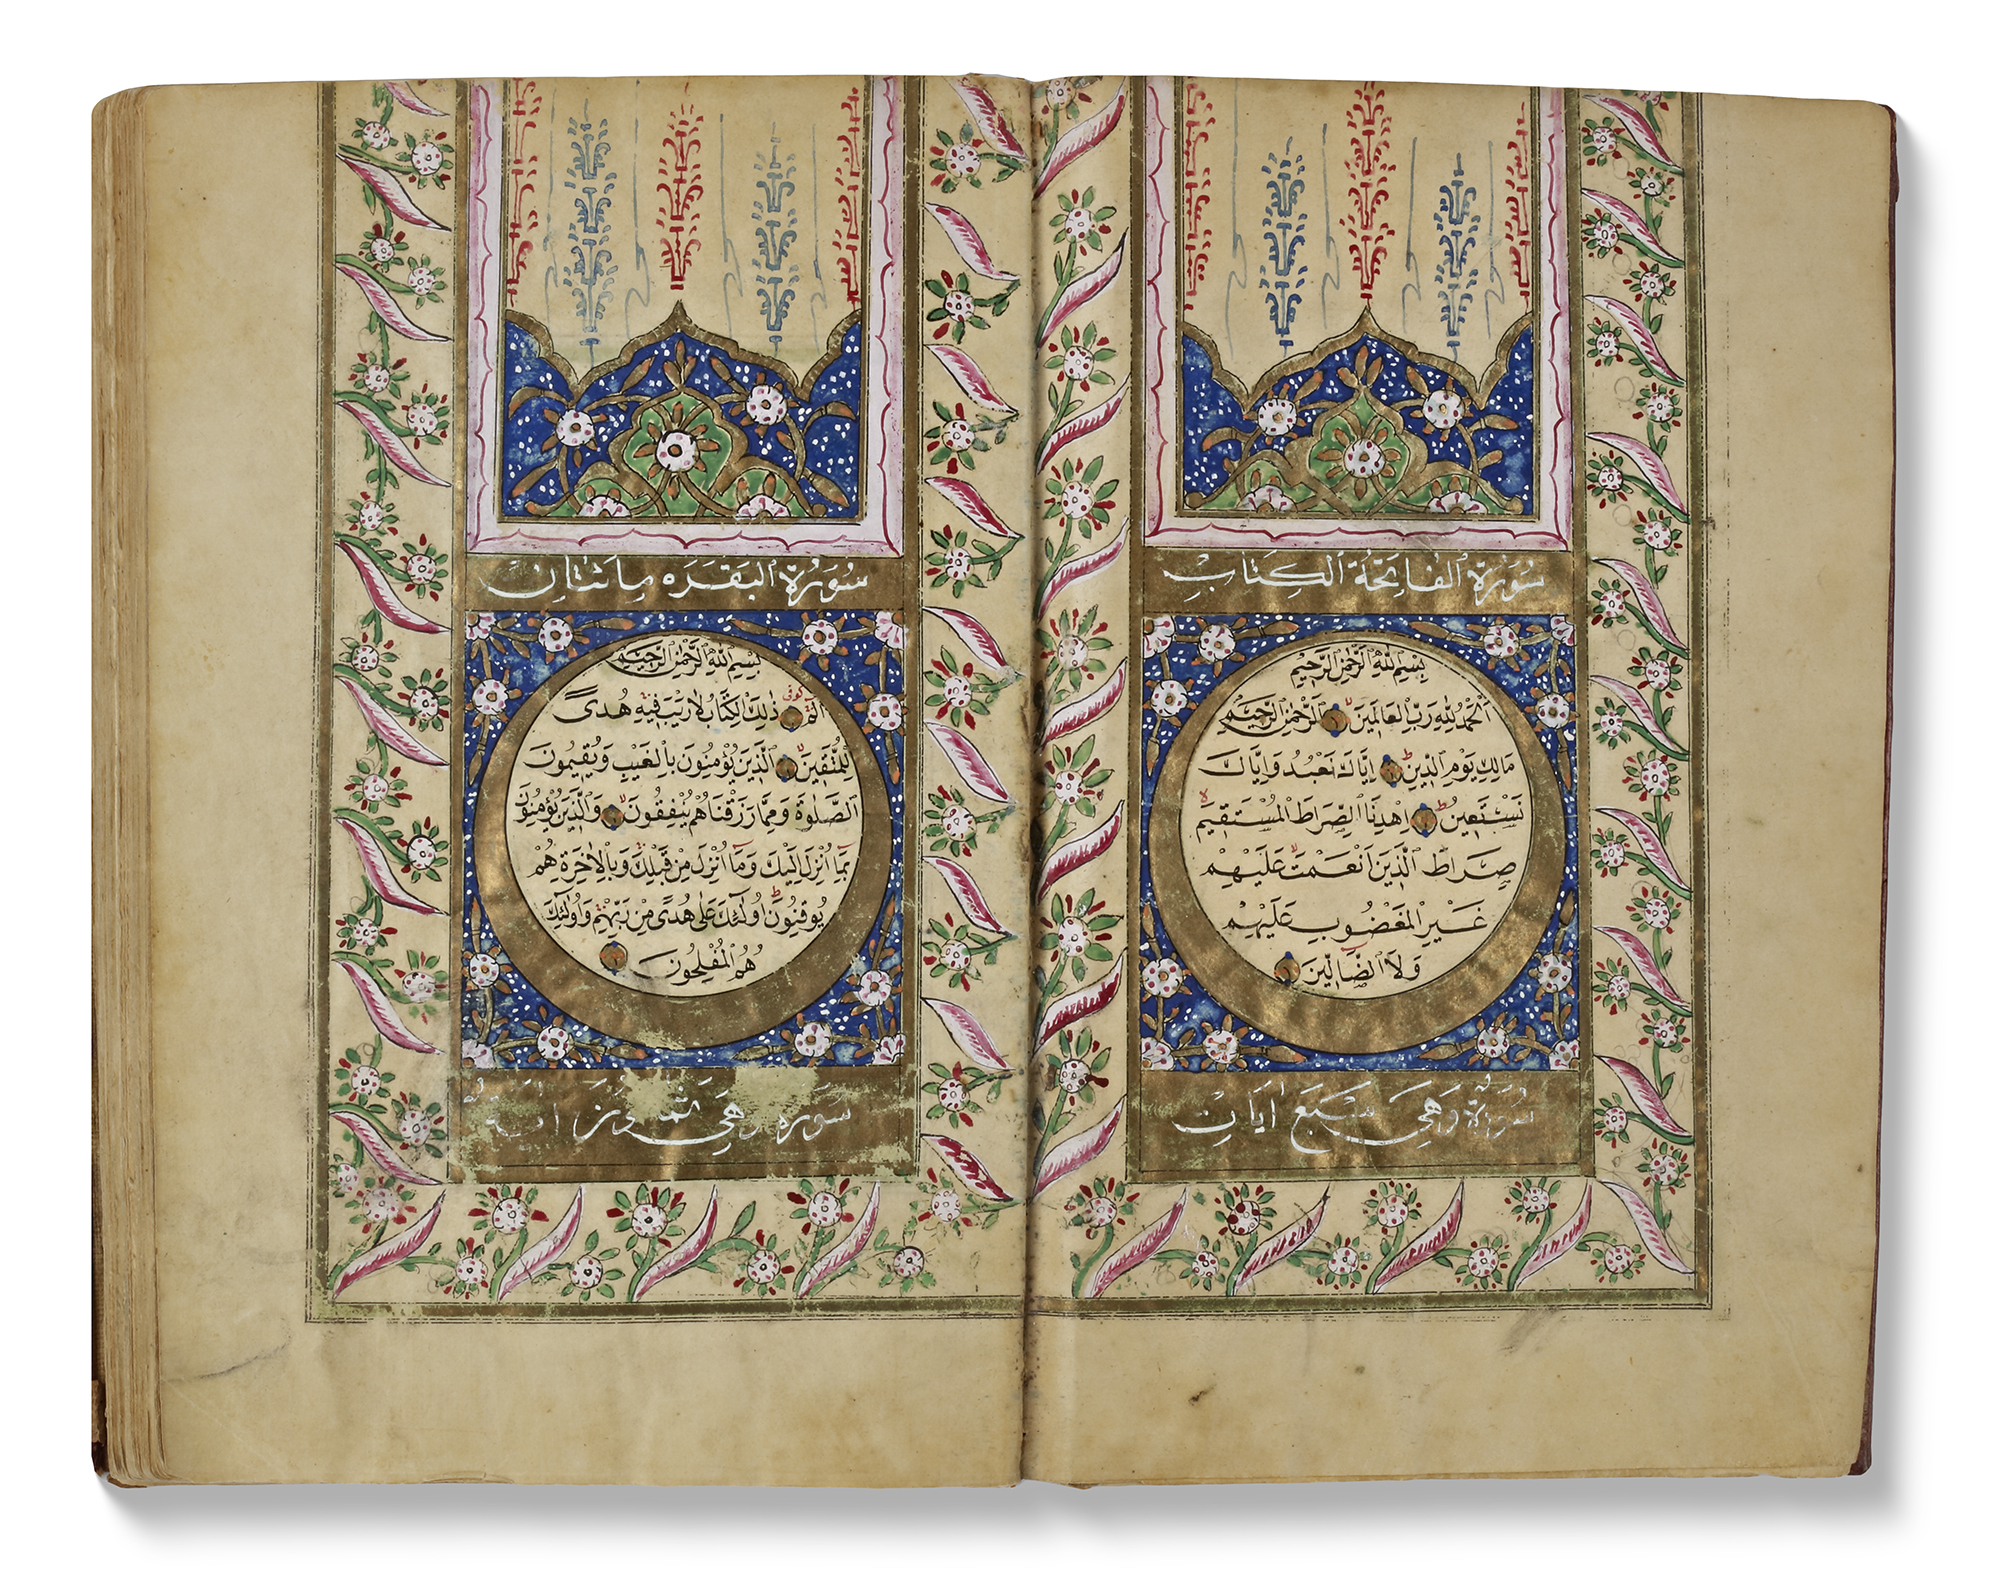 A FINE OTTOMAN QURAN, TURKEY, WRITTEN BY OMAR AL-FAWRABI STUDENT OF OMAR RUSHDI, DATED 1273 AH/1856 - Image 13 of 20